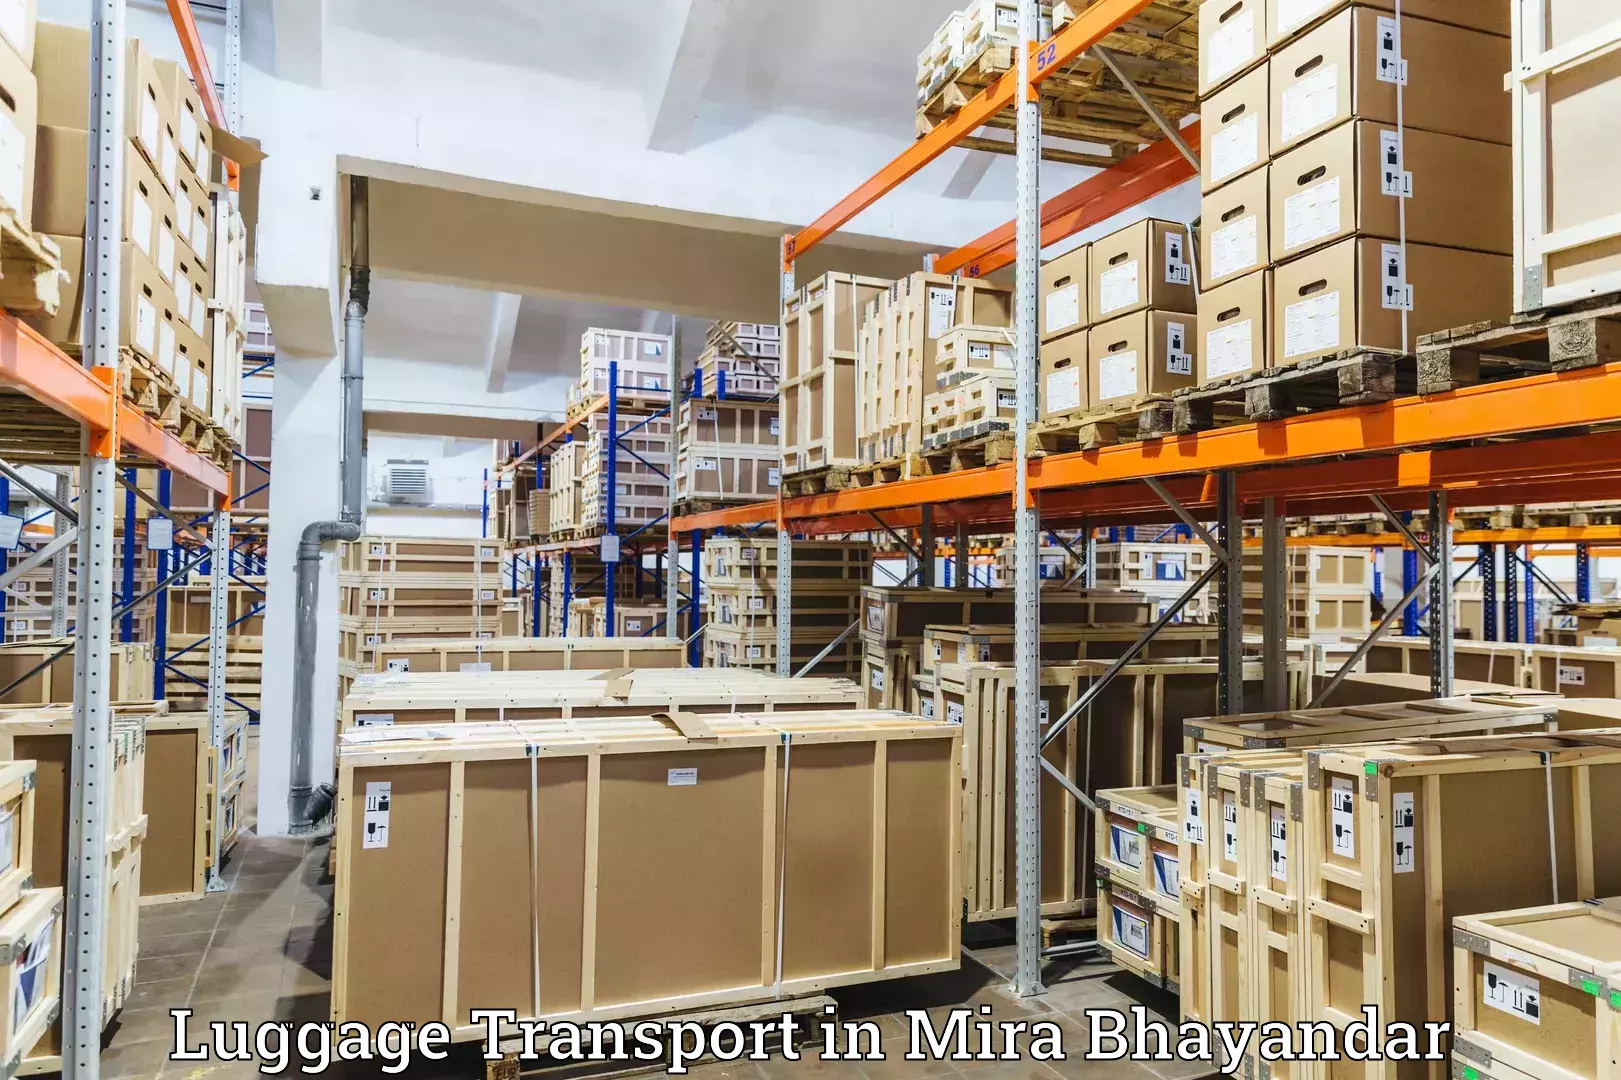 Luggage transport deals in Mira Bhayandar